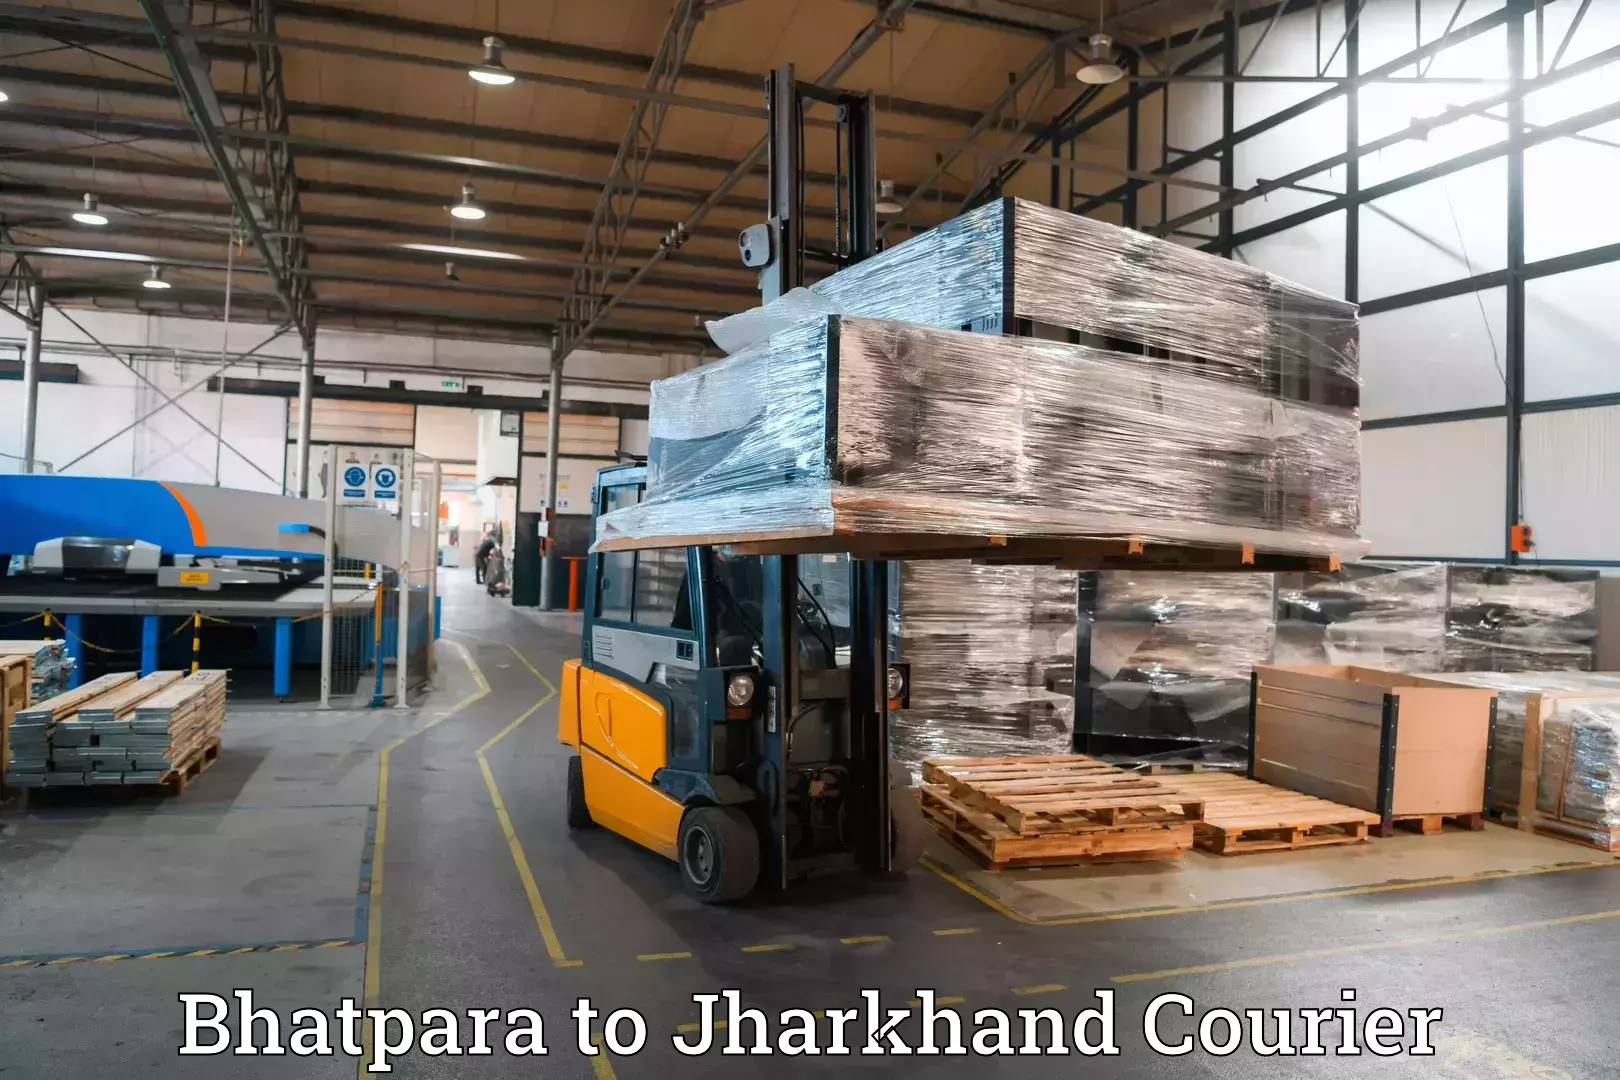 Luggage shipment tracking in Bhatpara to Bokaro